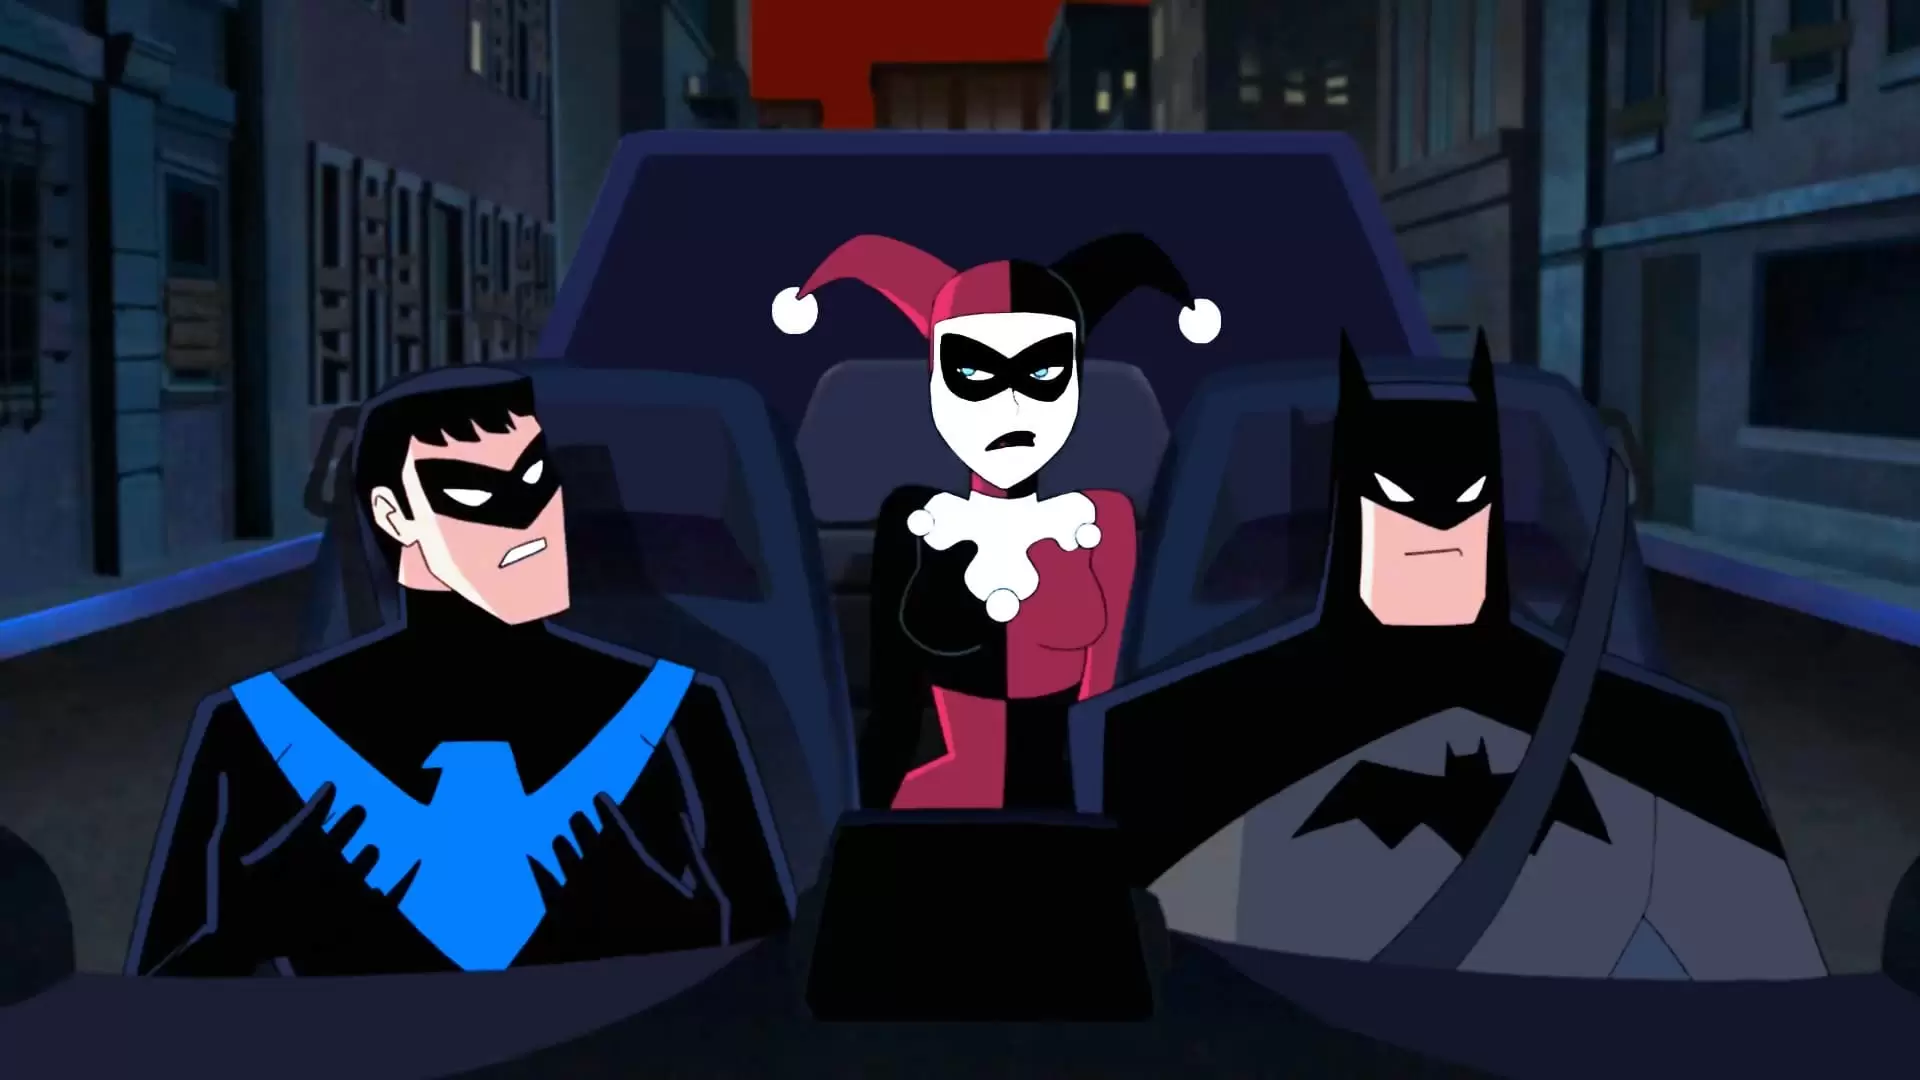 دانلود انیمیشن Batman and Harley Quinn 2017 (بتمن و هارلی کوئین) با زیرنویس فارسی